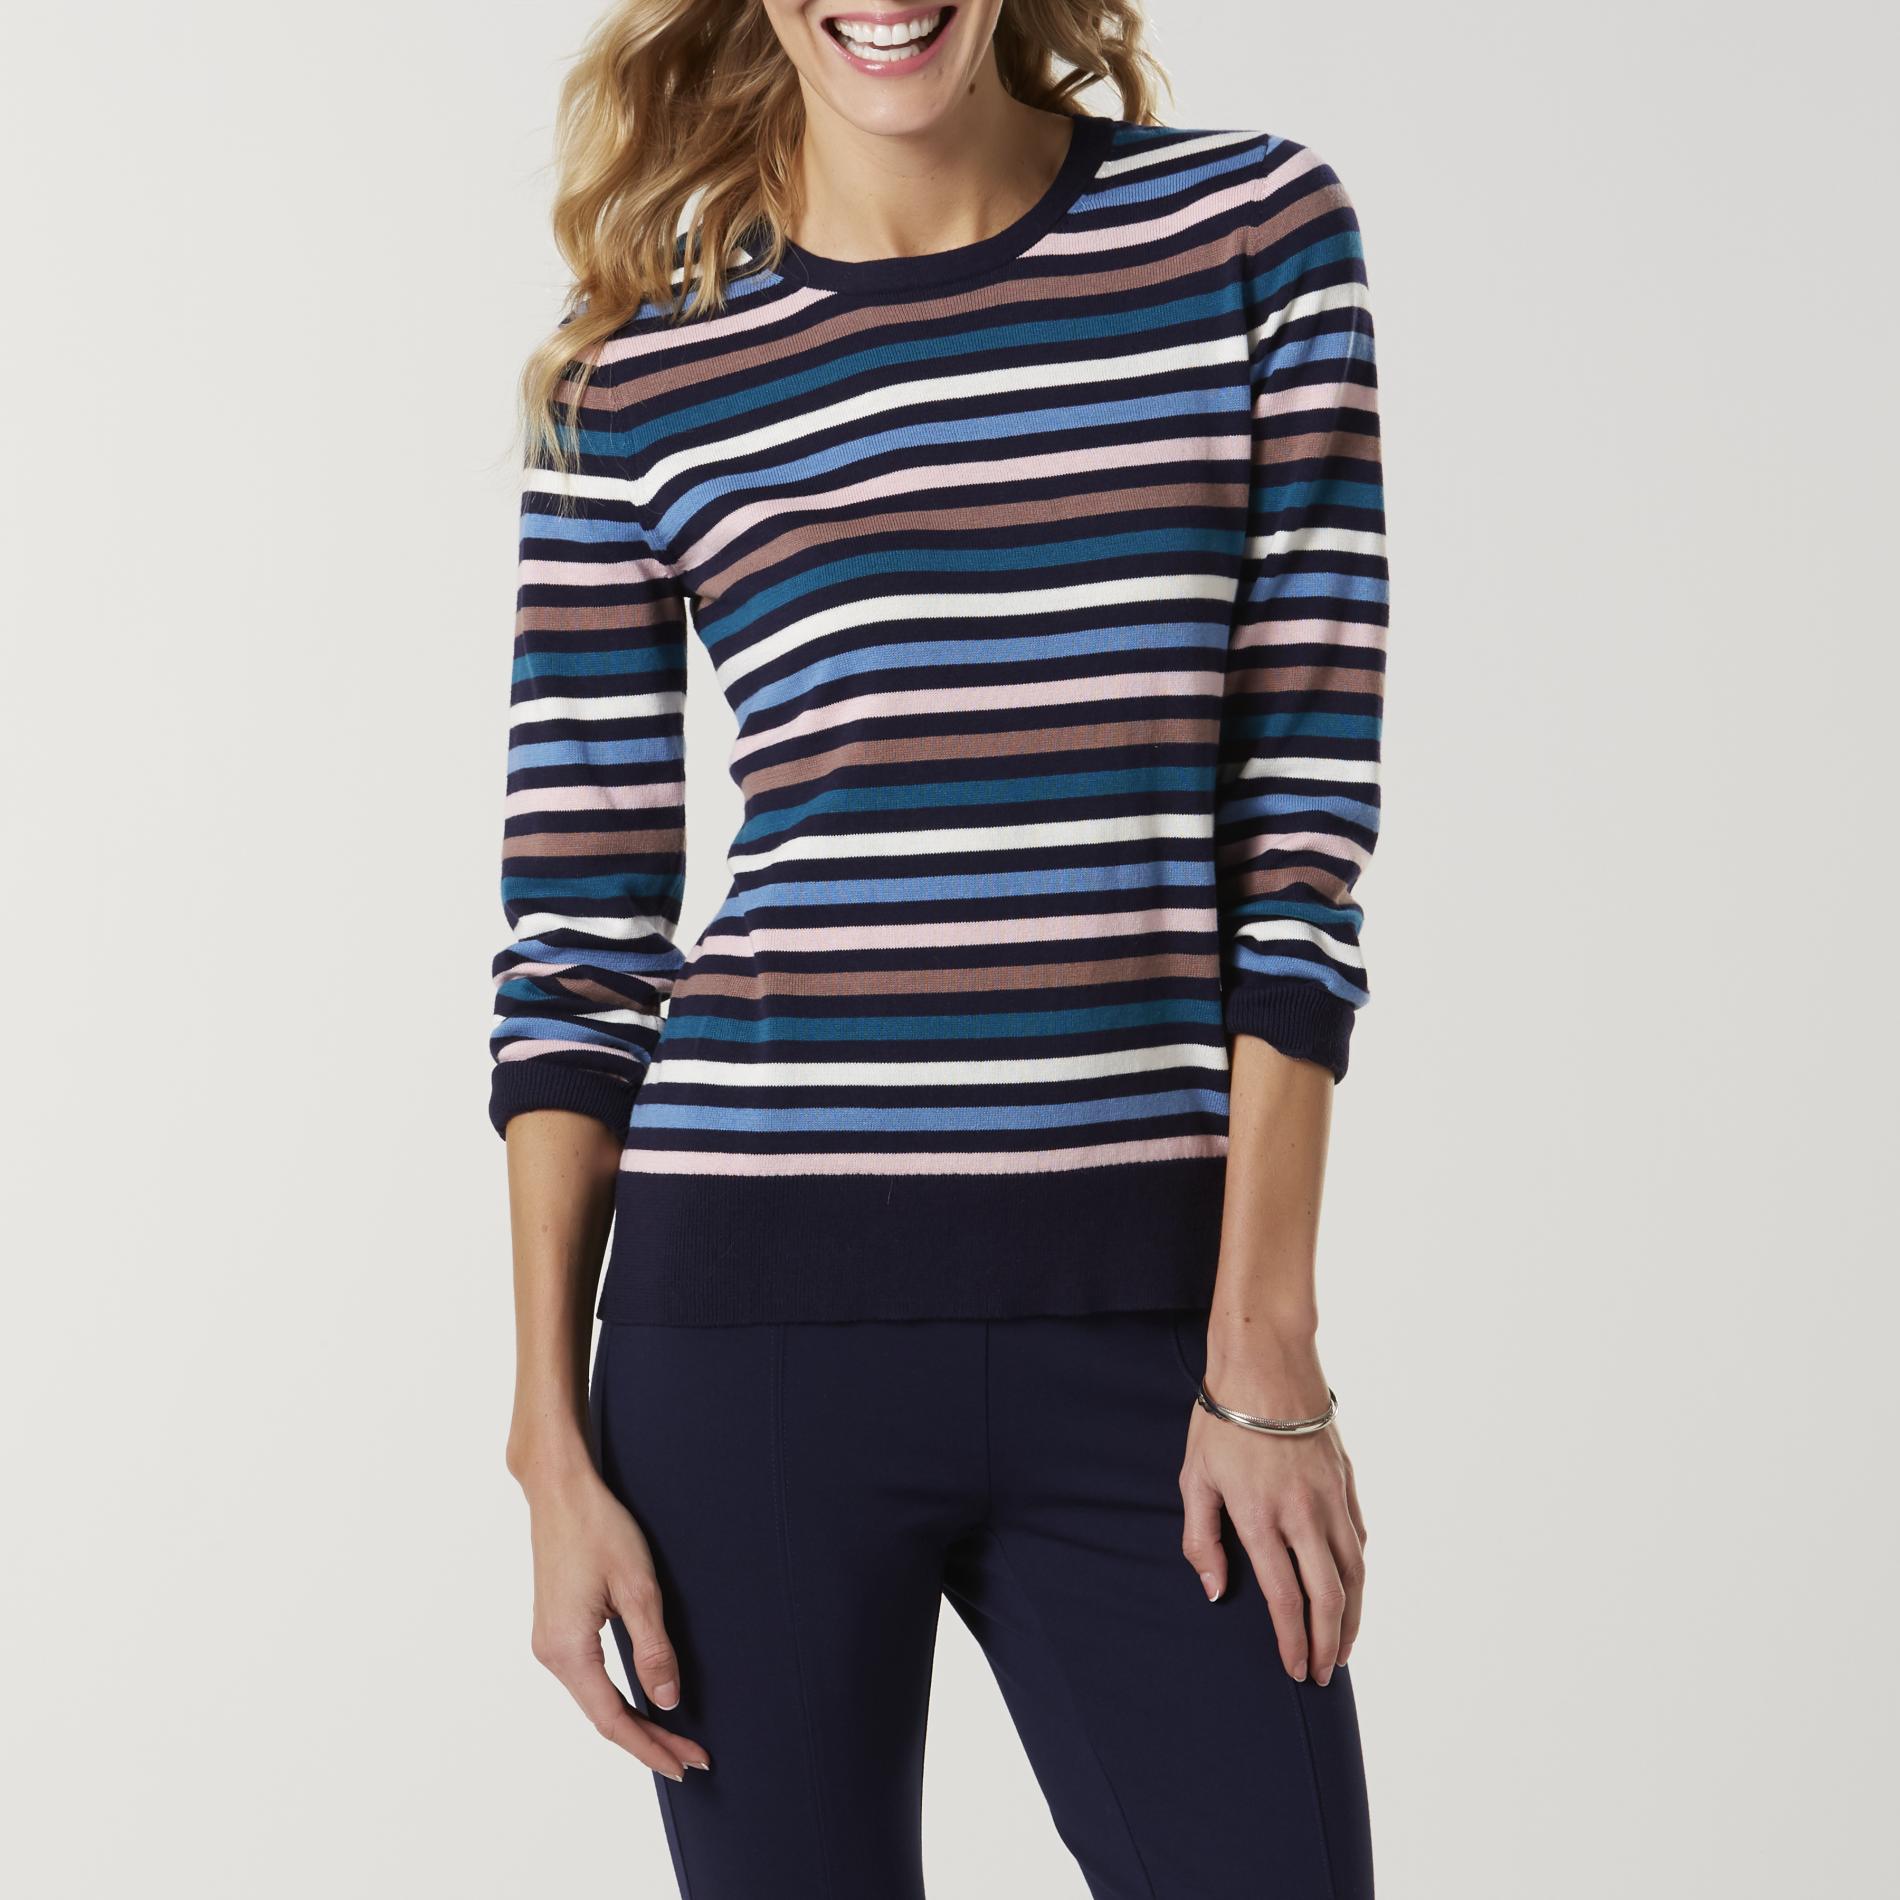 Basic Editions Women's Lightweight Sweater - Striped